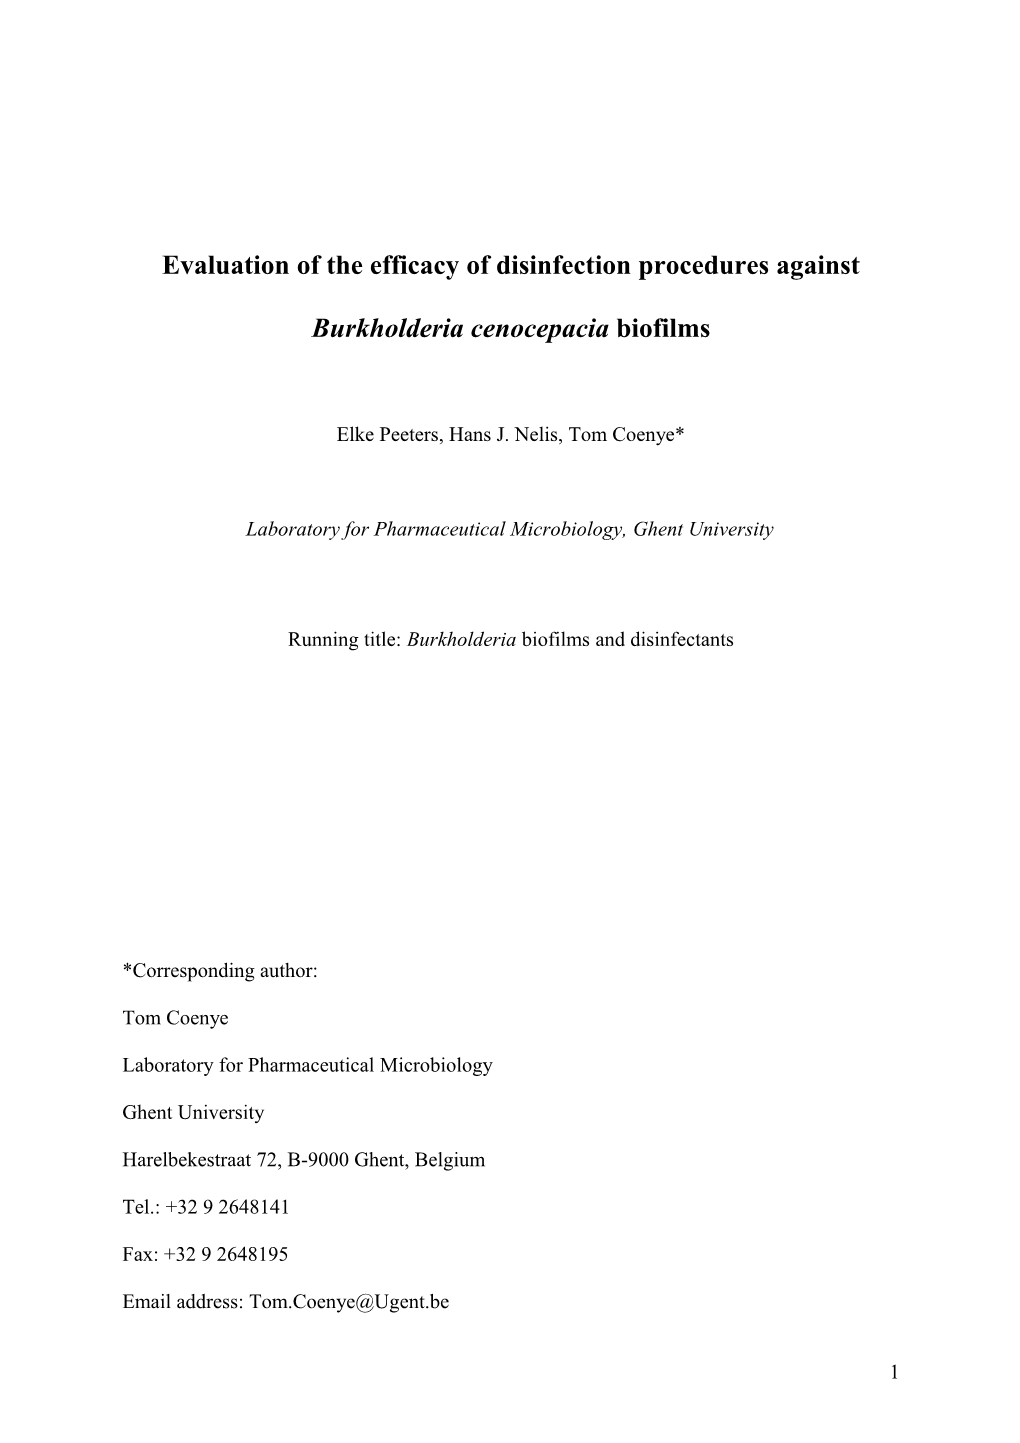 Evaluation of Different Disinfectants on Burkholderia Cenocepacia Biofilms